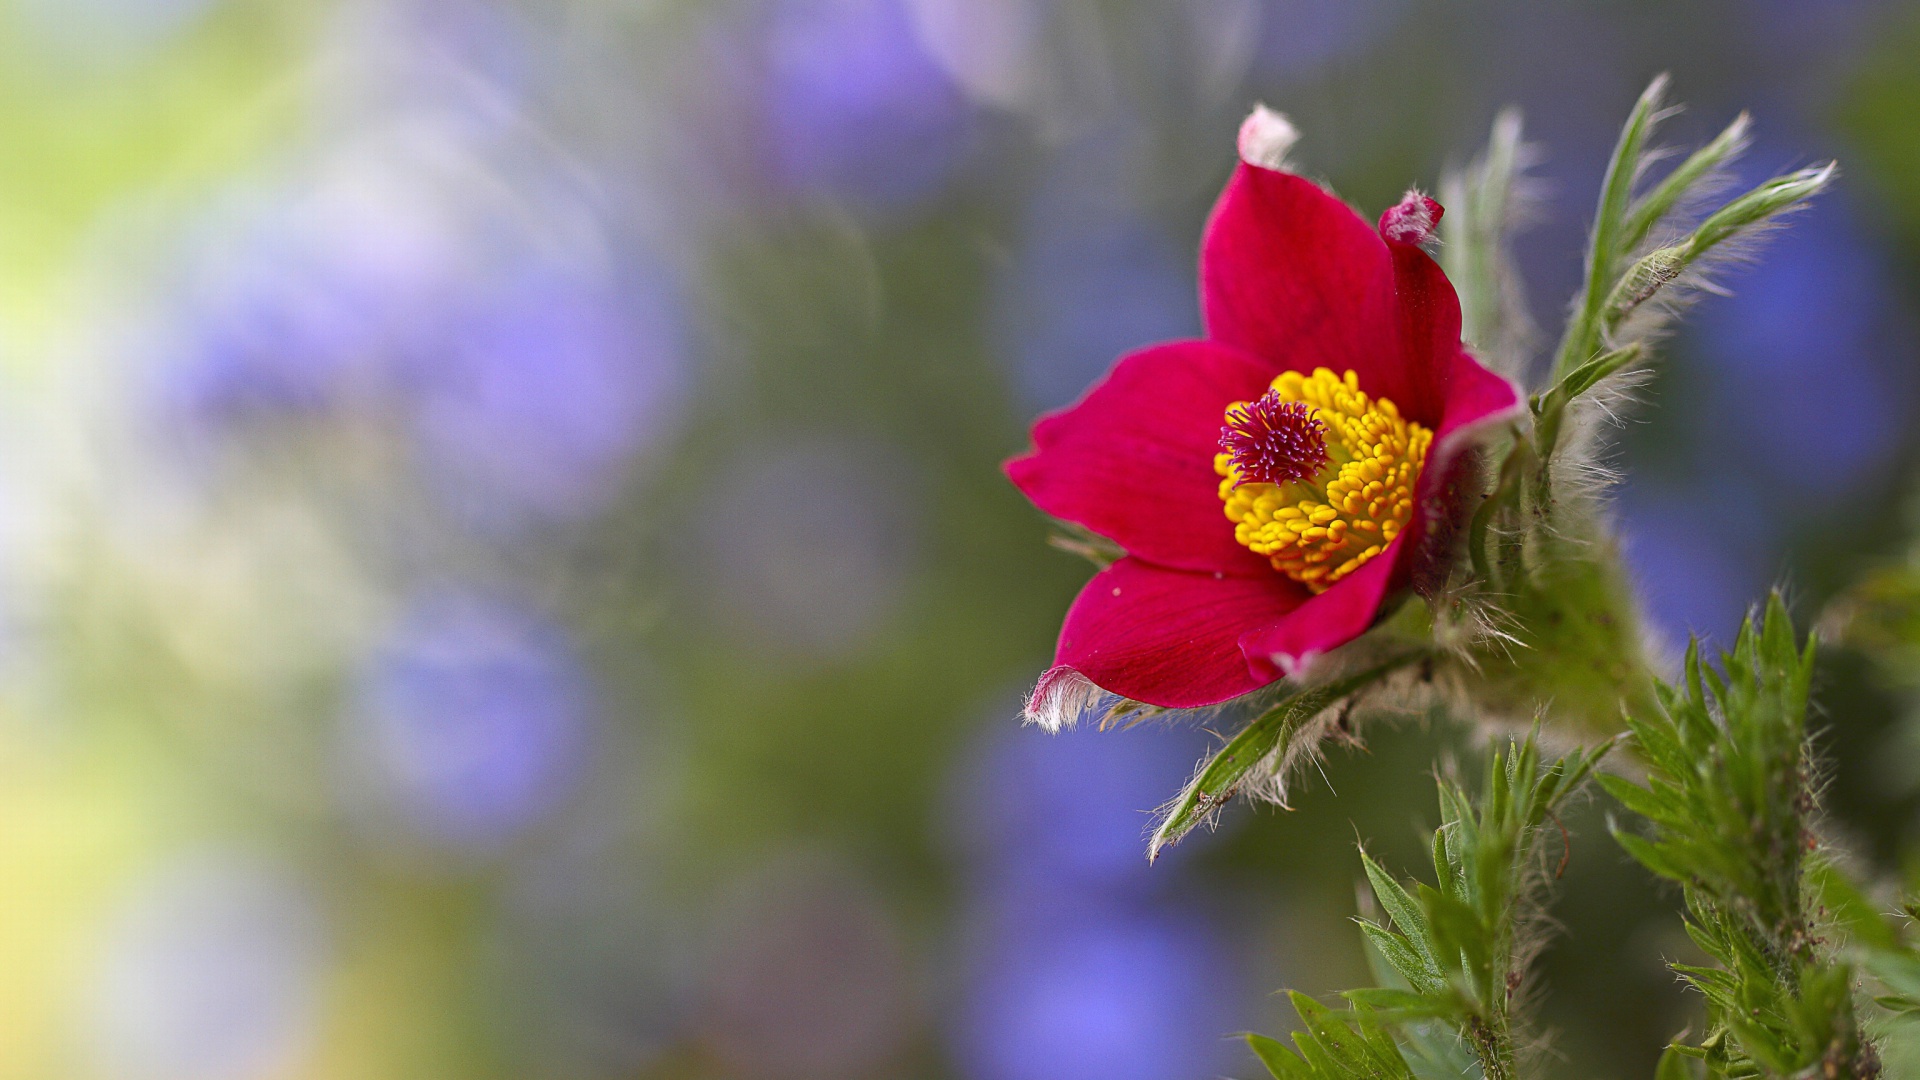 Sfondi Blurred flower photo 1920x1080